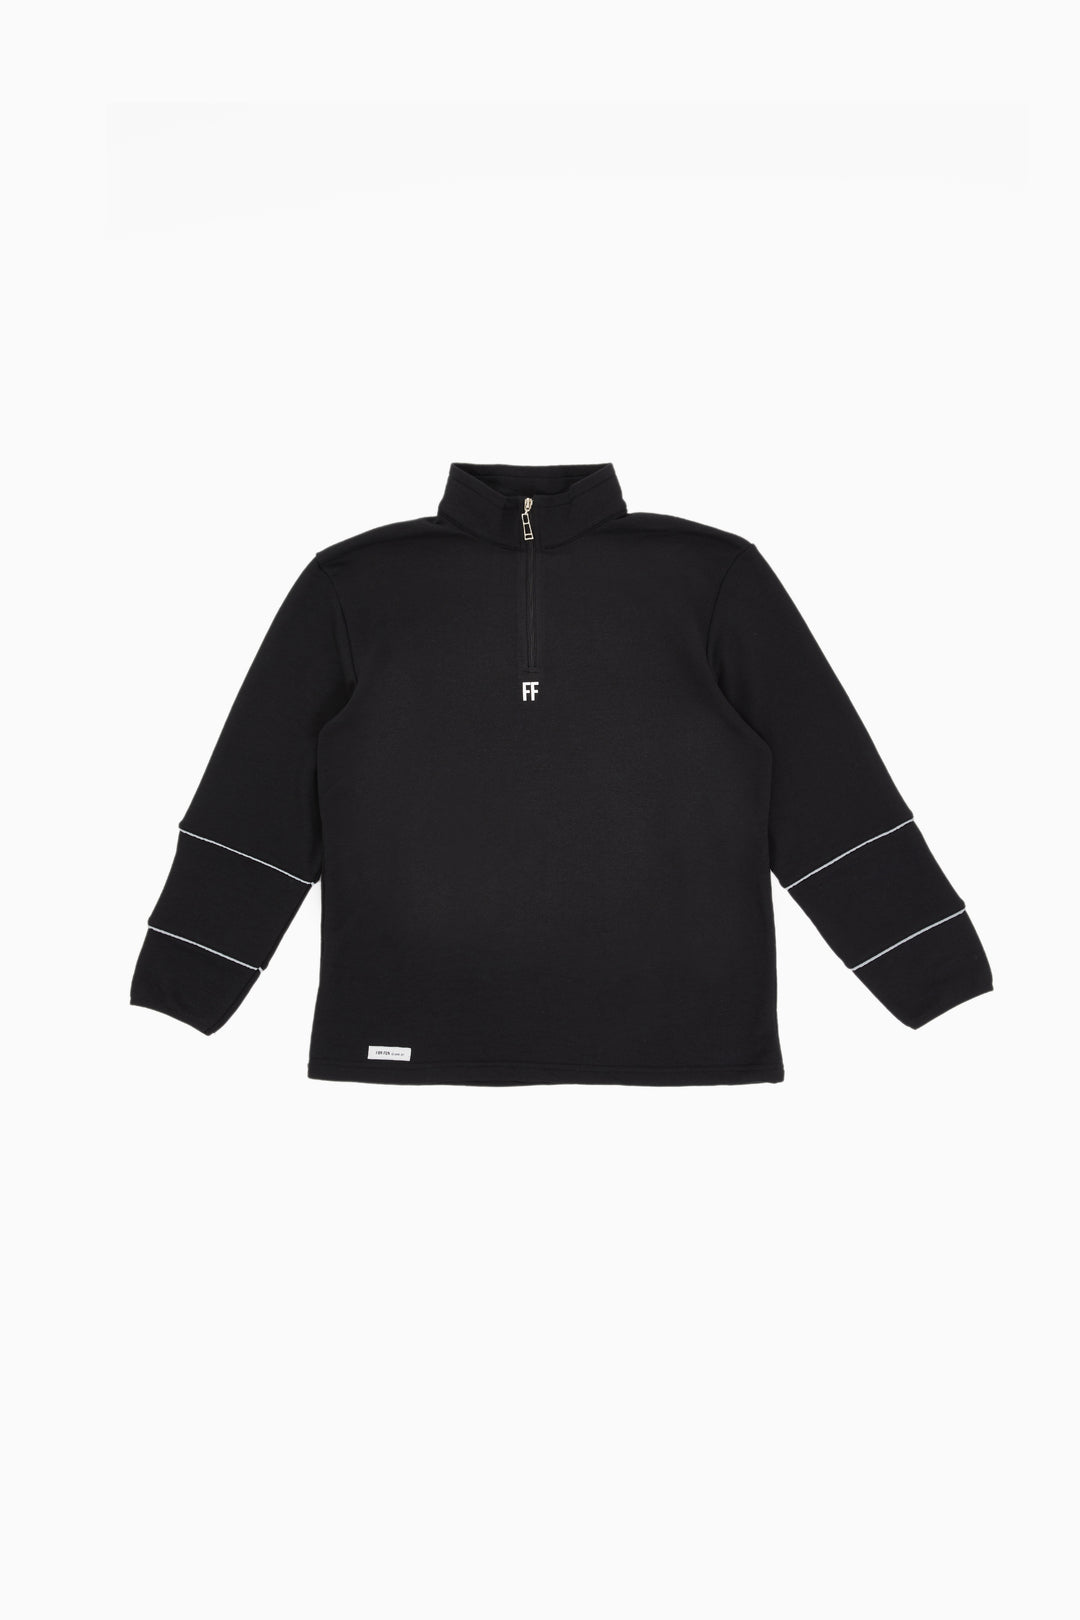 FF / Reflective Strip Zipper Sweatshirt